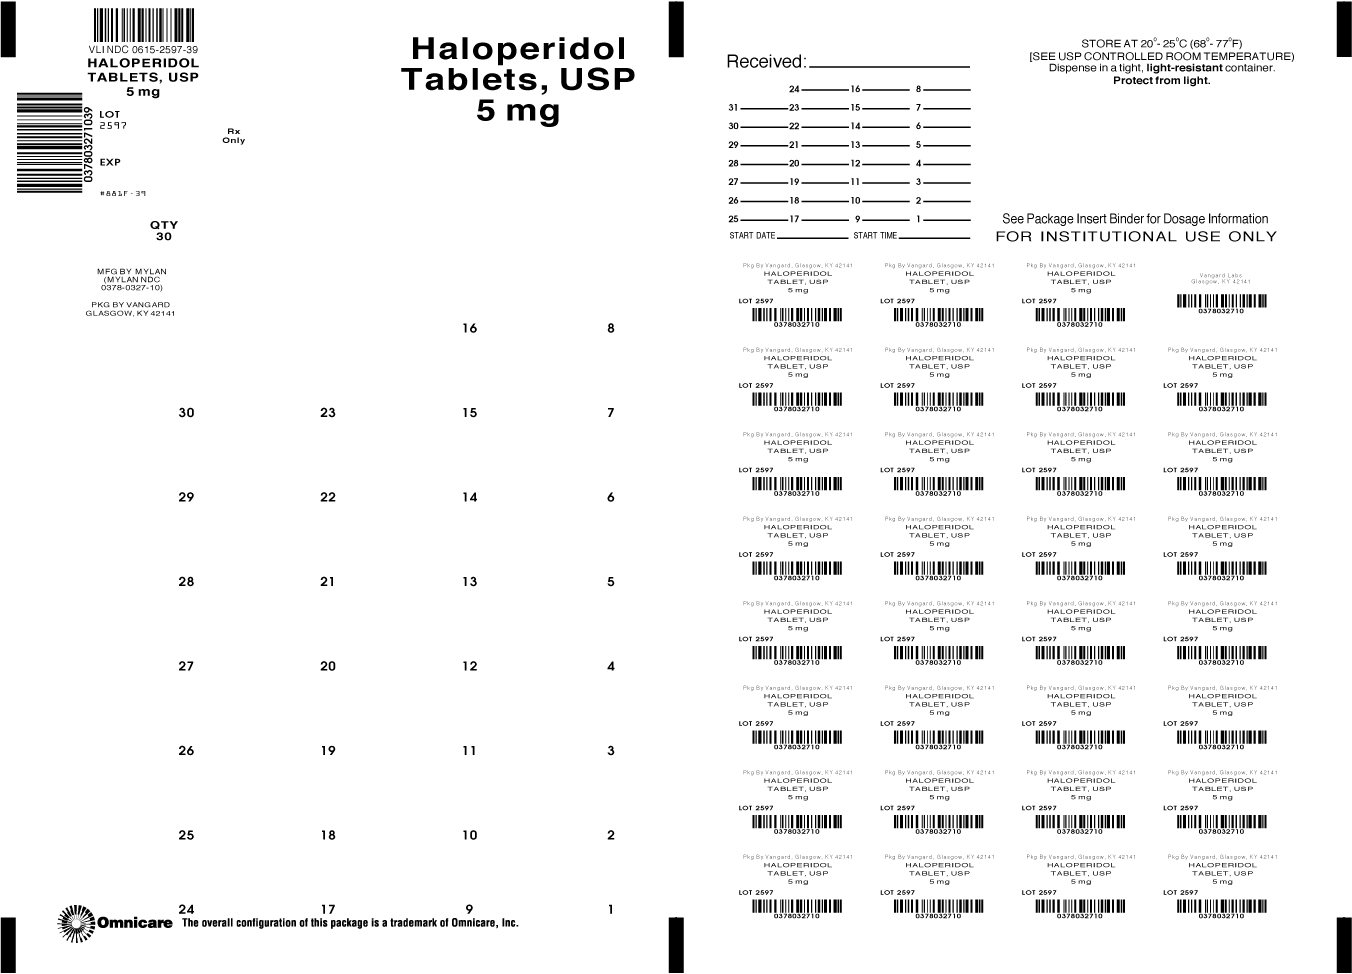 Haloperidol Tablets, USP 5mg